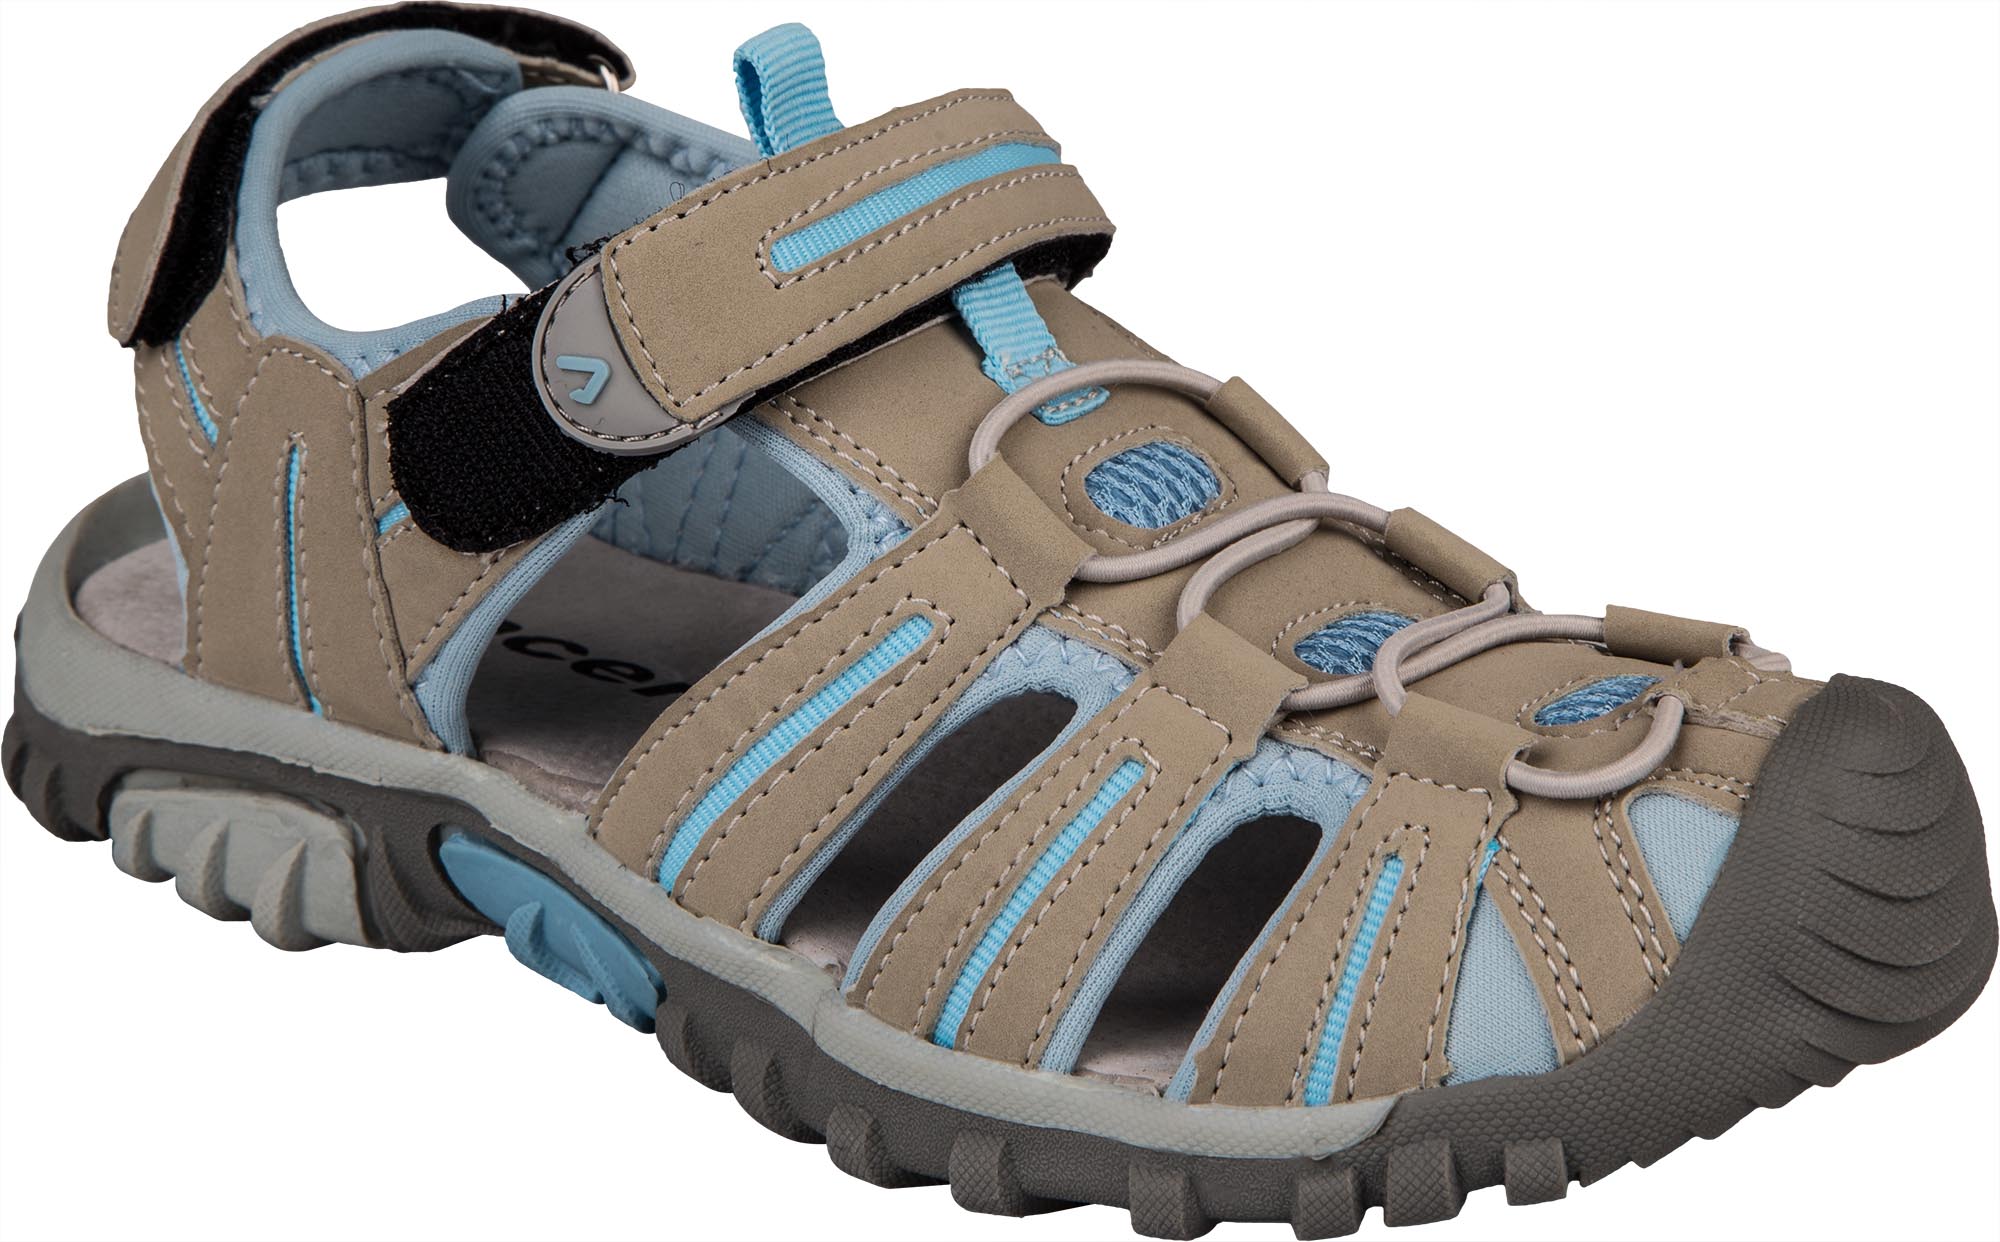 ABRA - Women's sandals